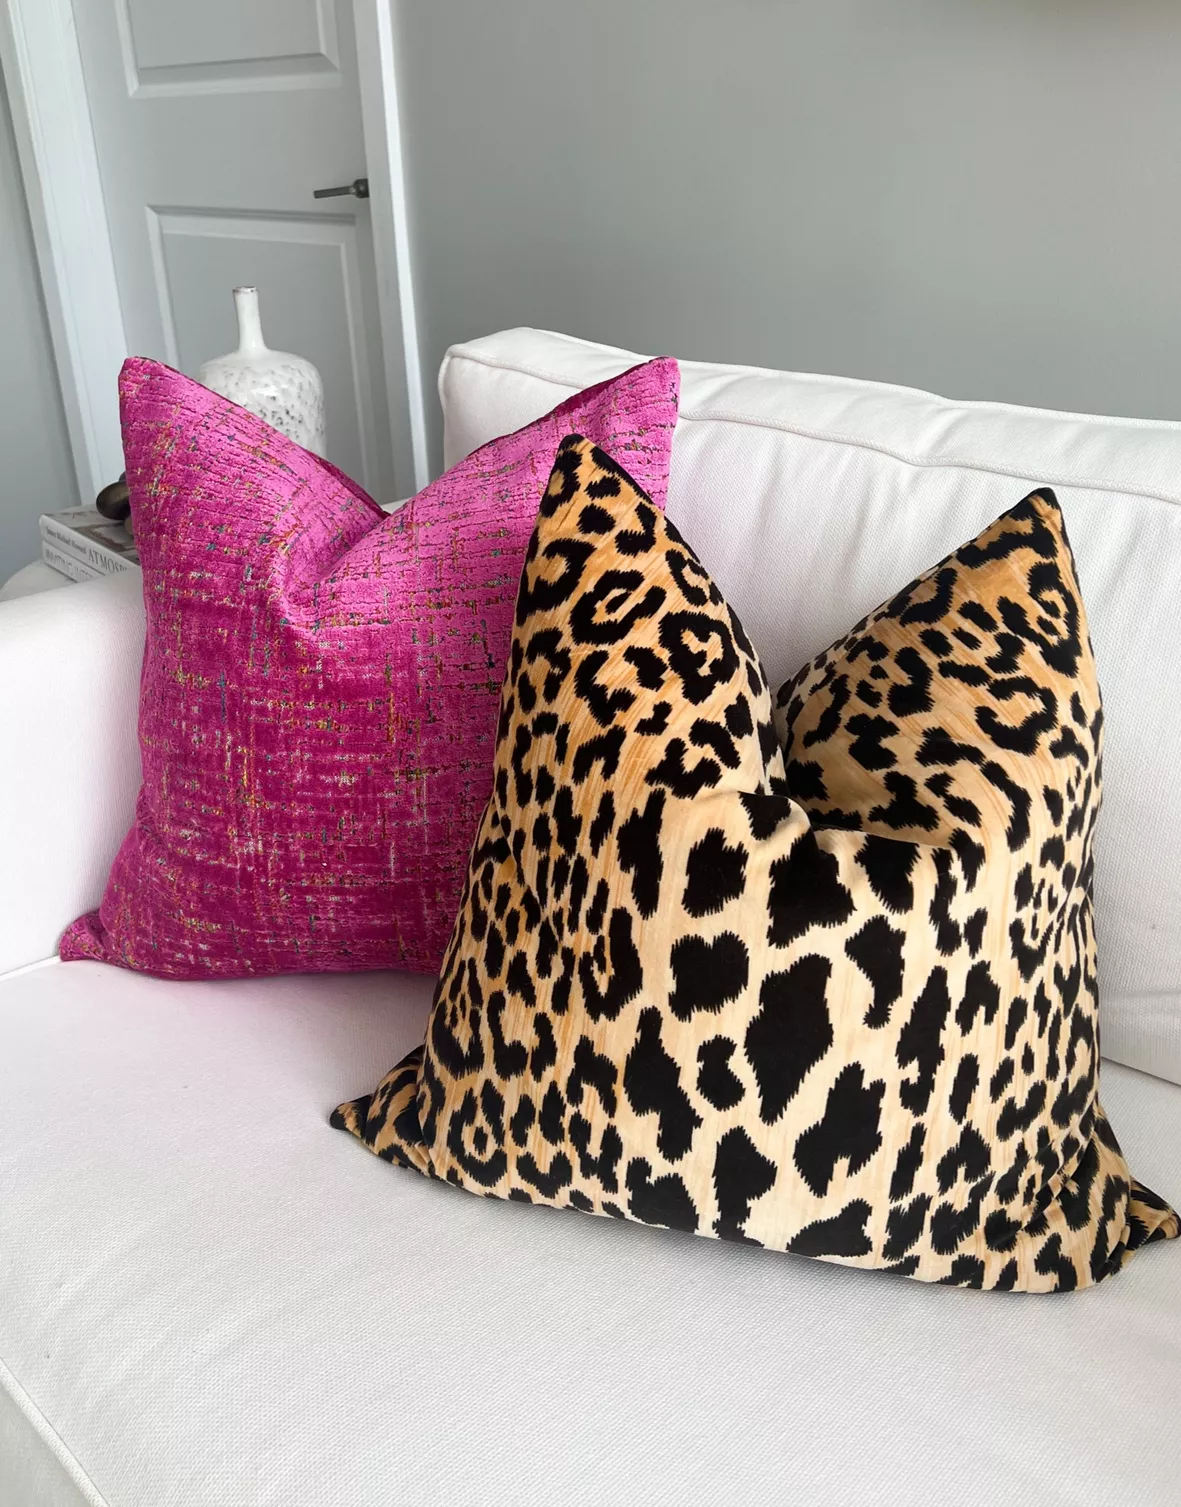 Leopard print throw pillow, decorative throw pillows